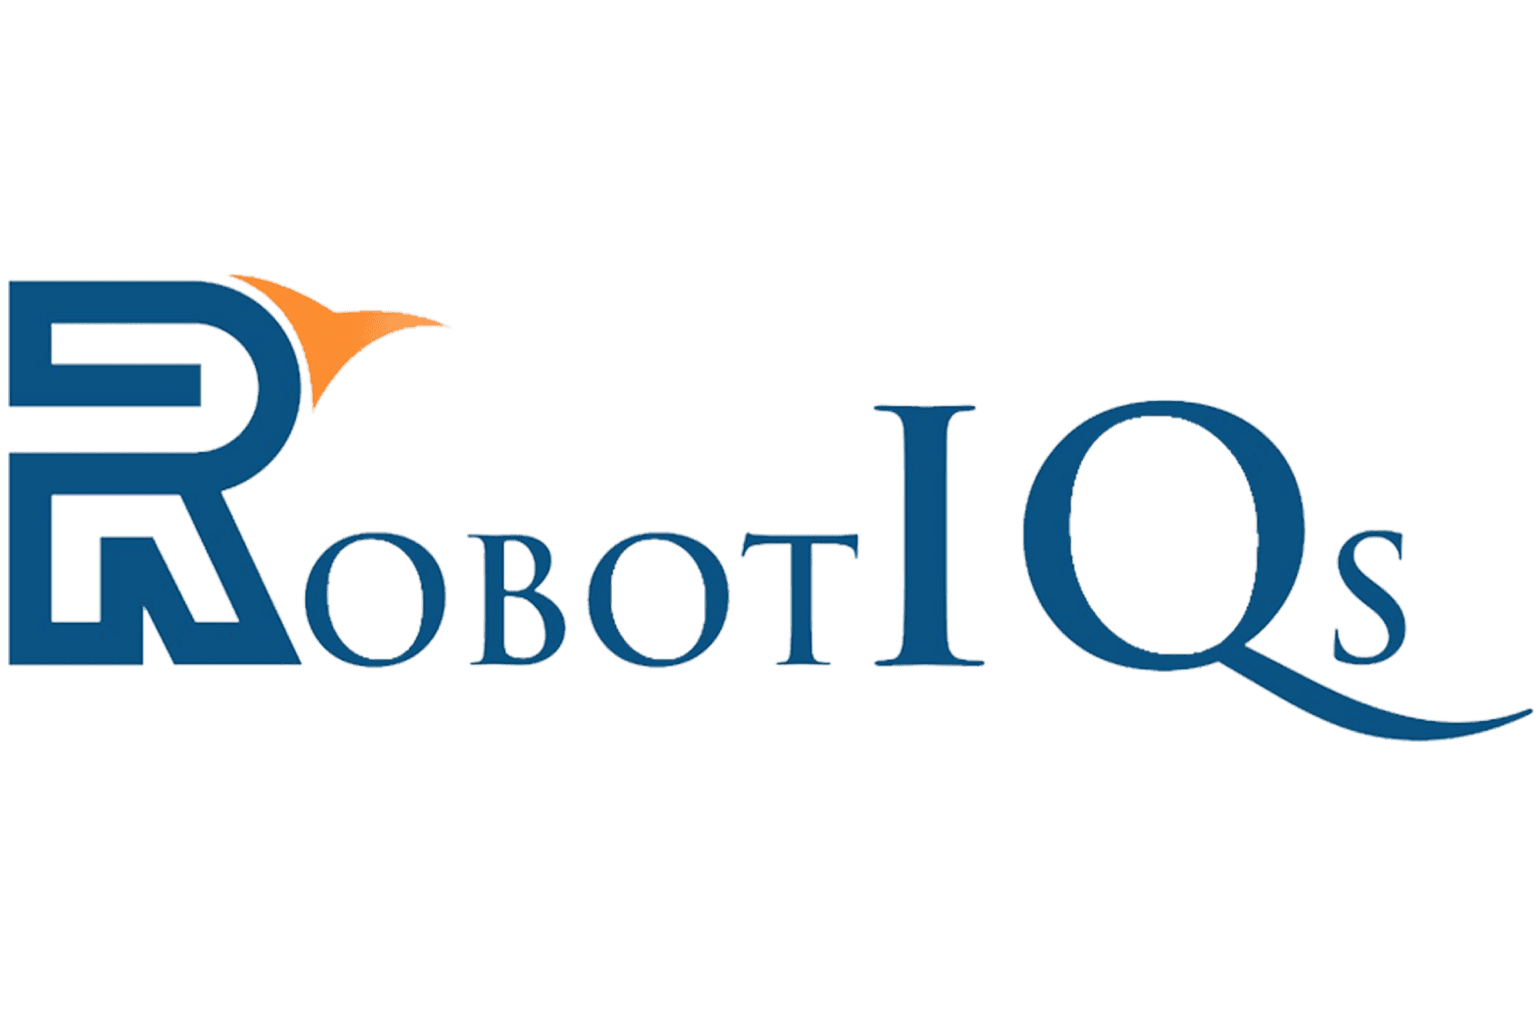 Robotics IQ and UAS Global are partners